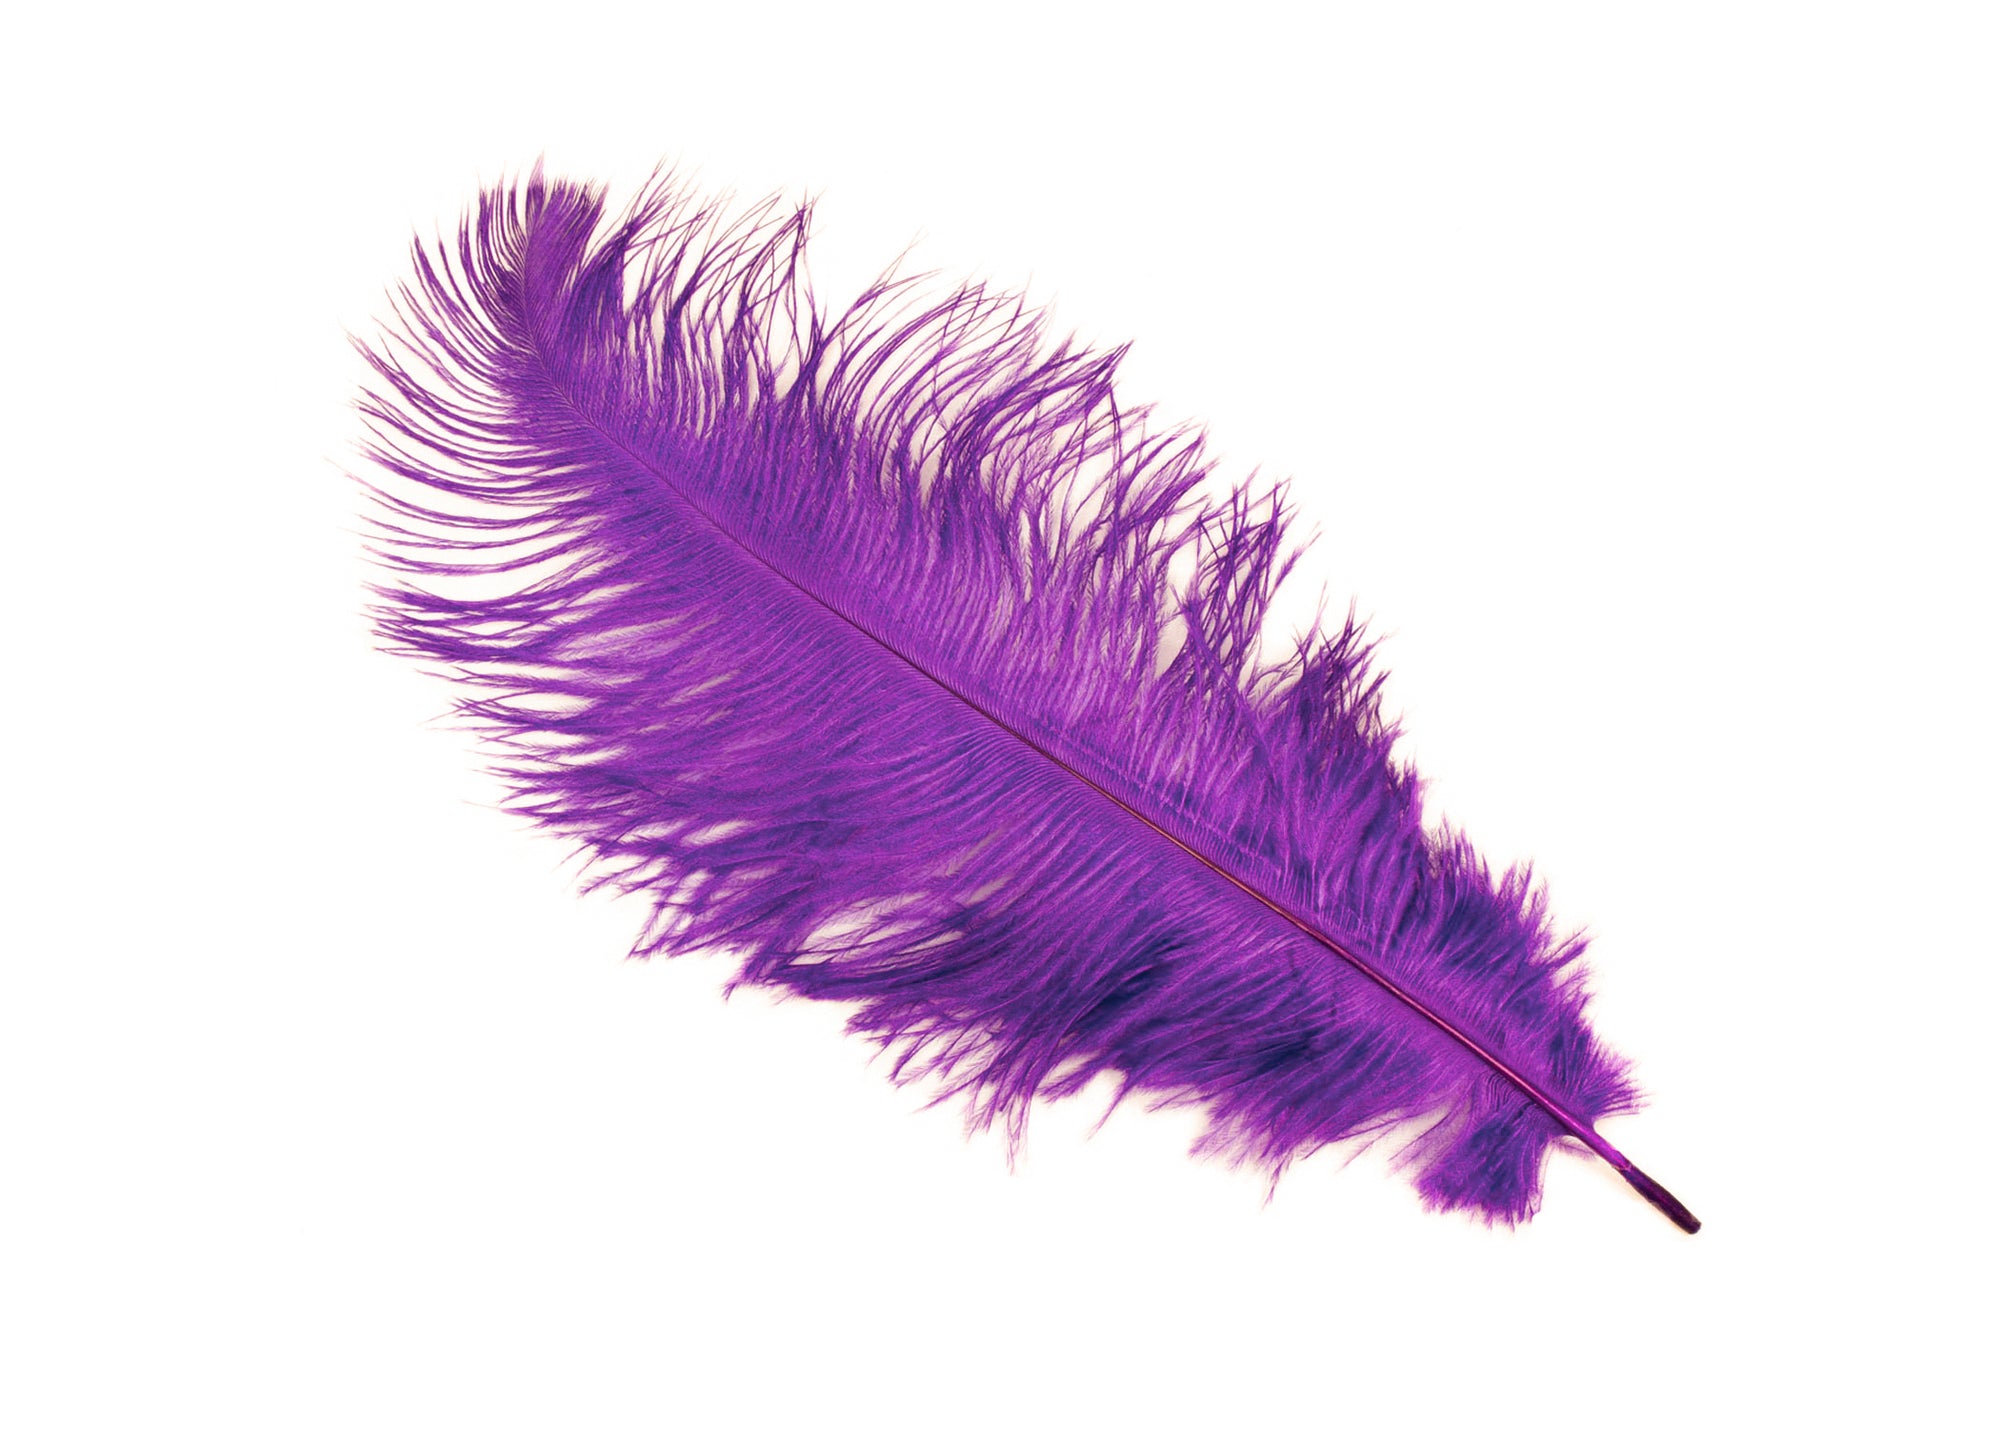 Light Pink Ostrich Feather 16-20 inch Long per Each